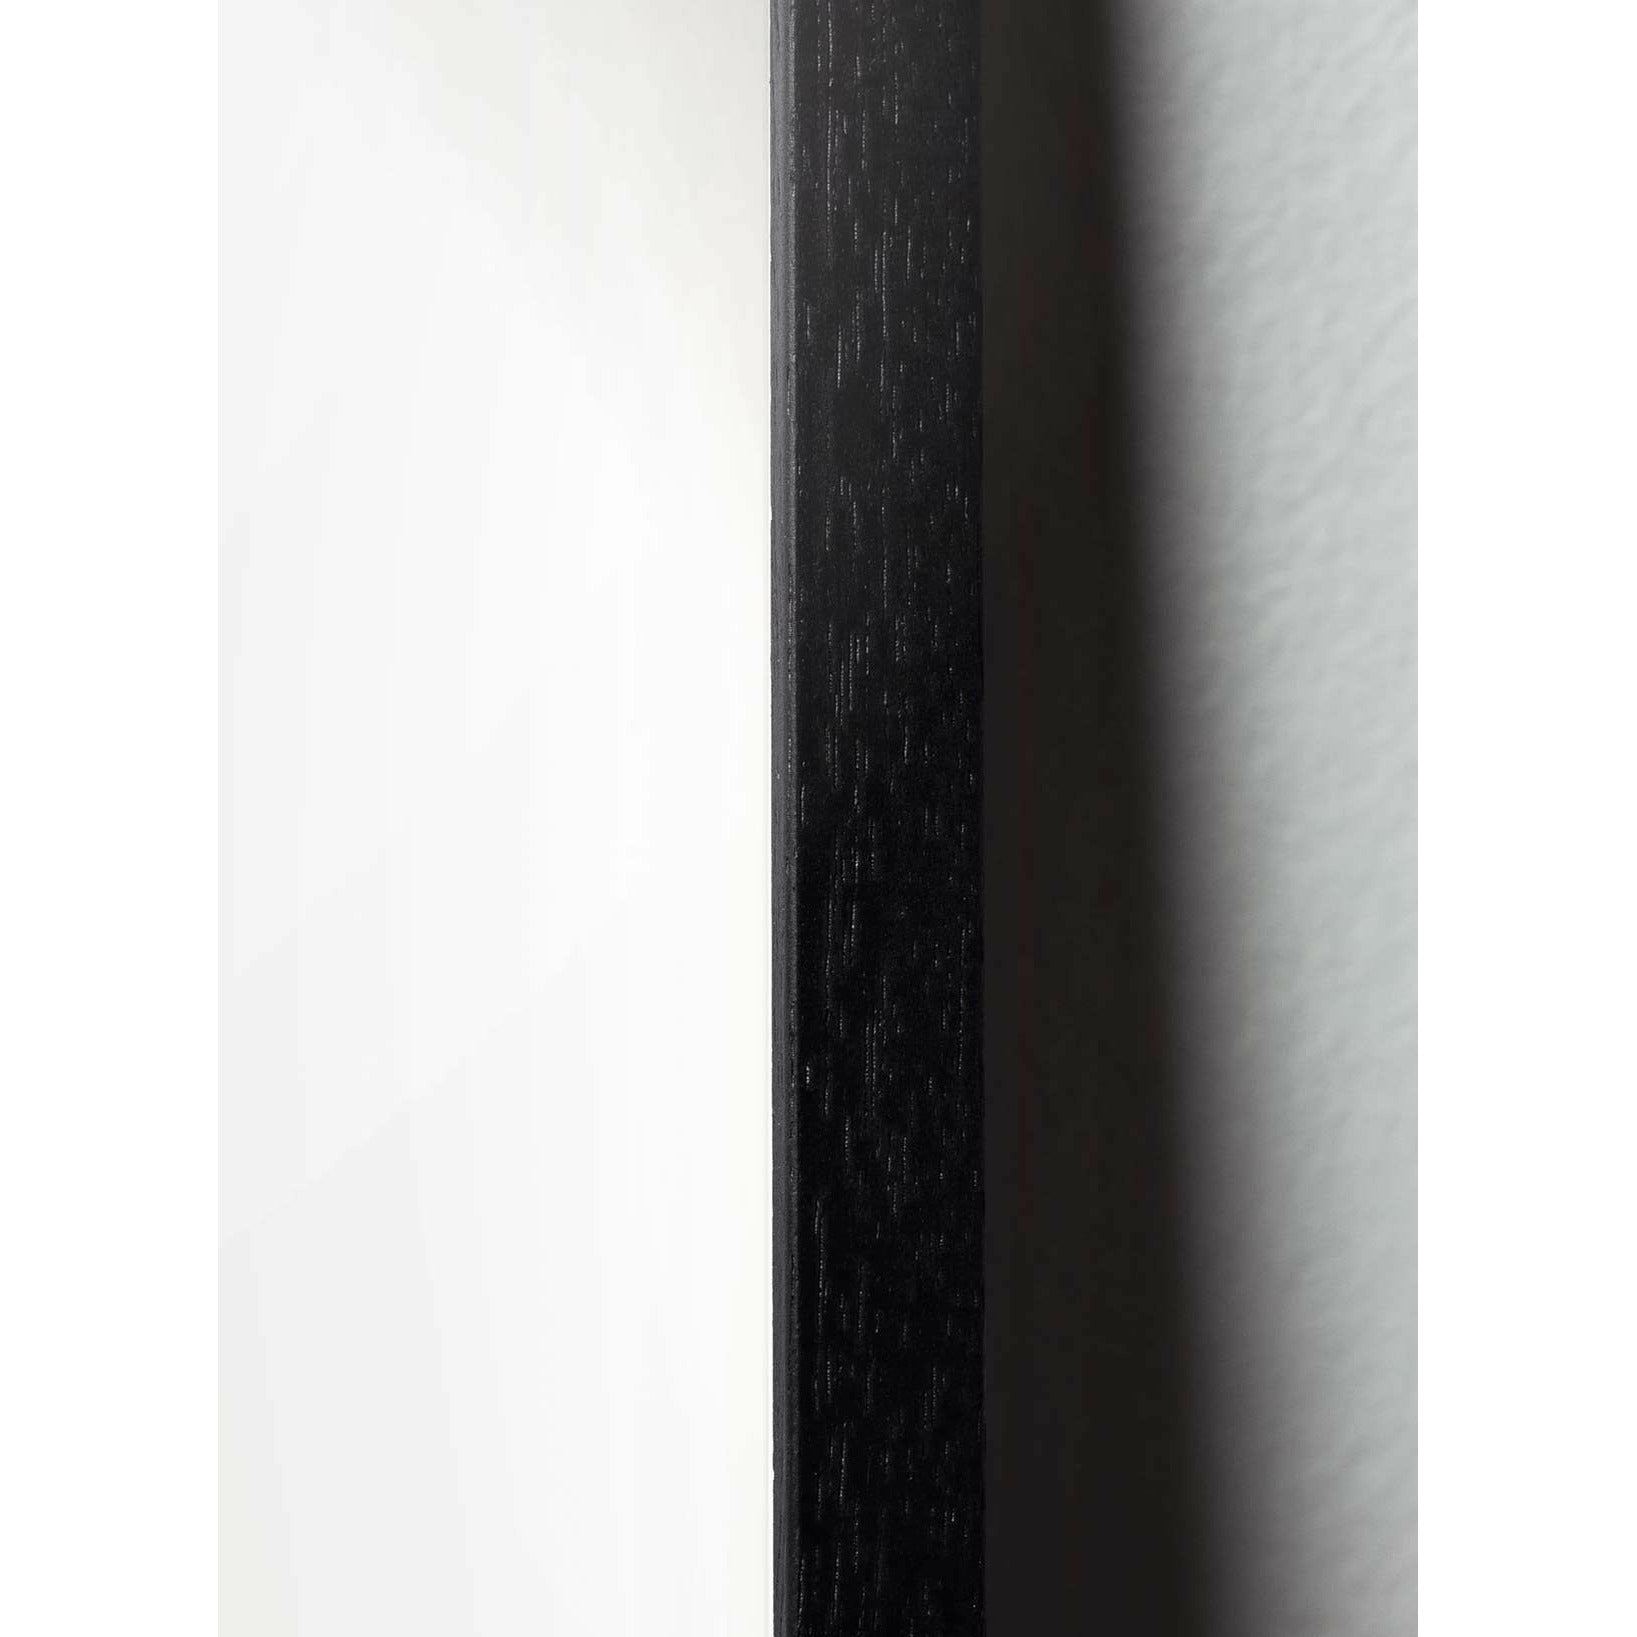 brainchild Swan Classic plakat, ramme i sort lakeret træ 70 x100 cm, mørkeblå baggrund